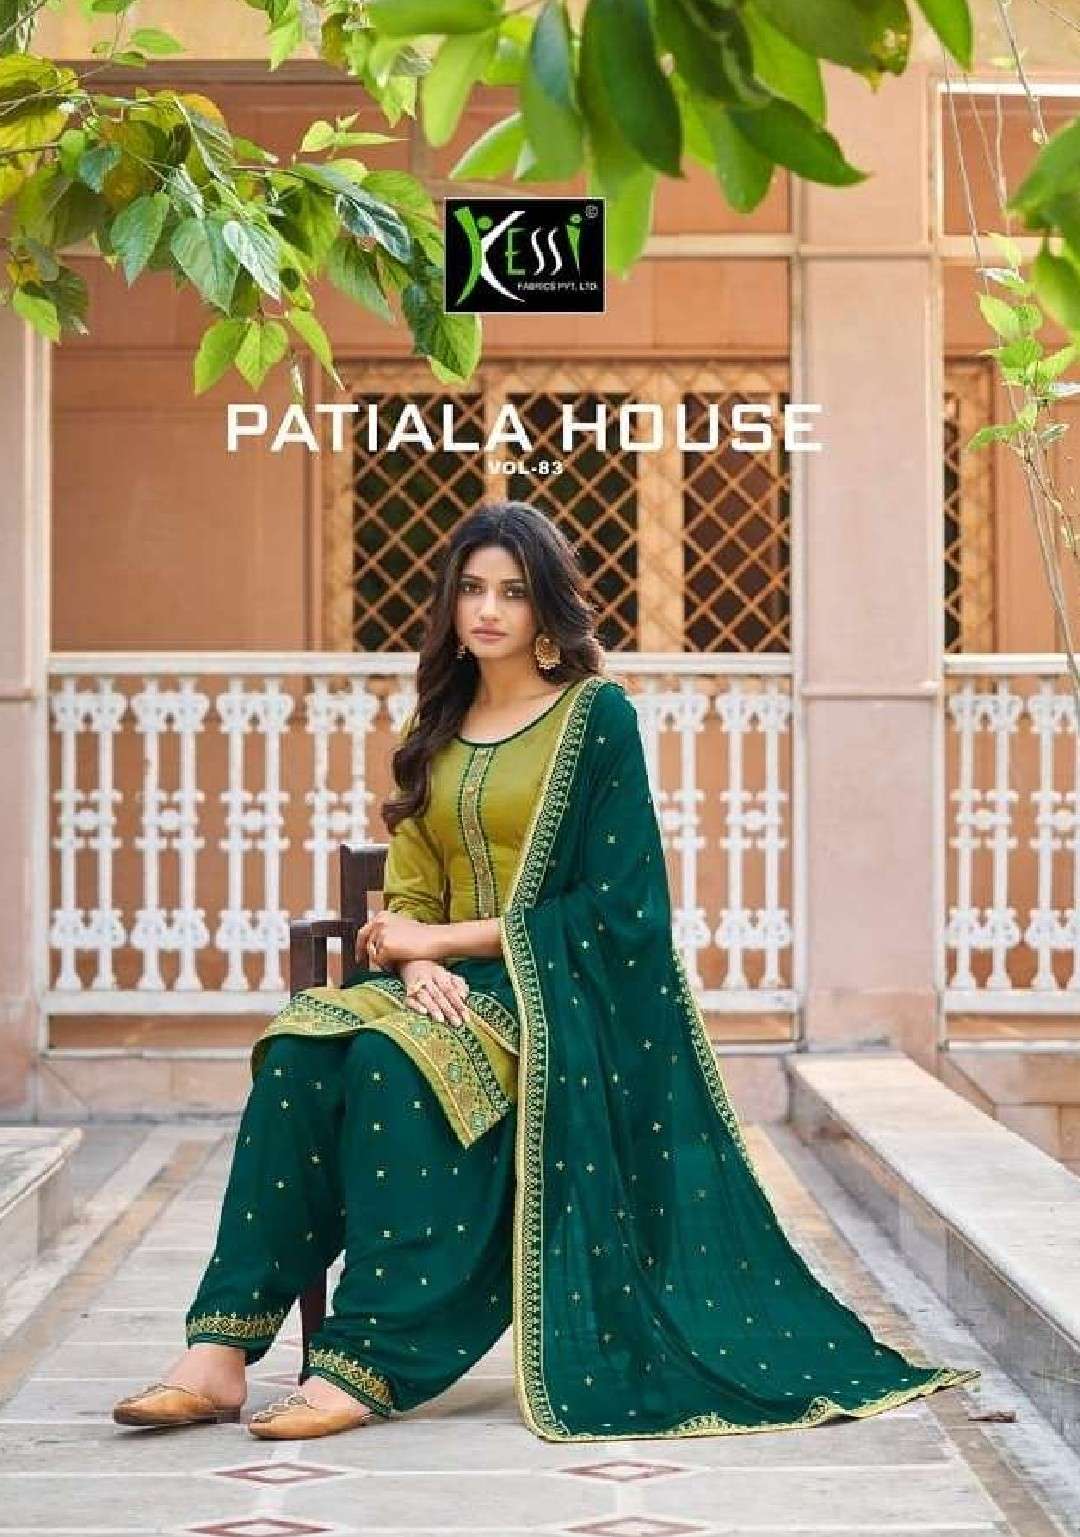 Kessi presents patiyala house vol-83 jam silk patiyala salwar suit Wholesaler